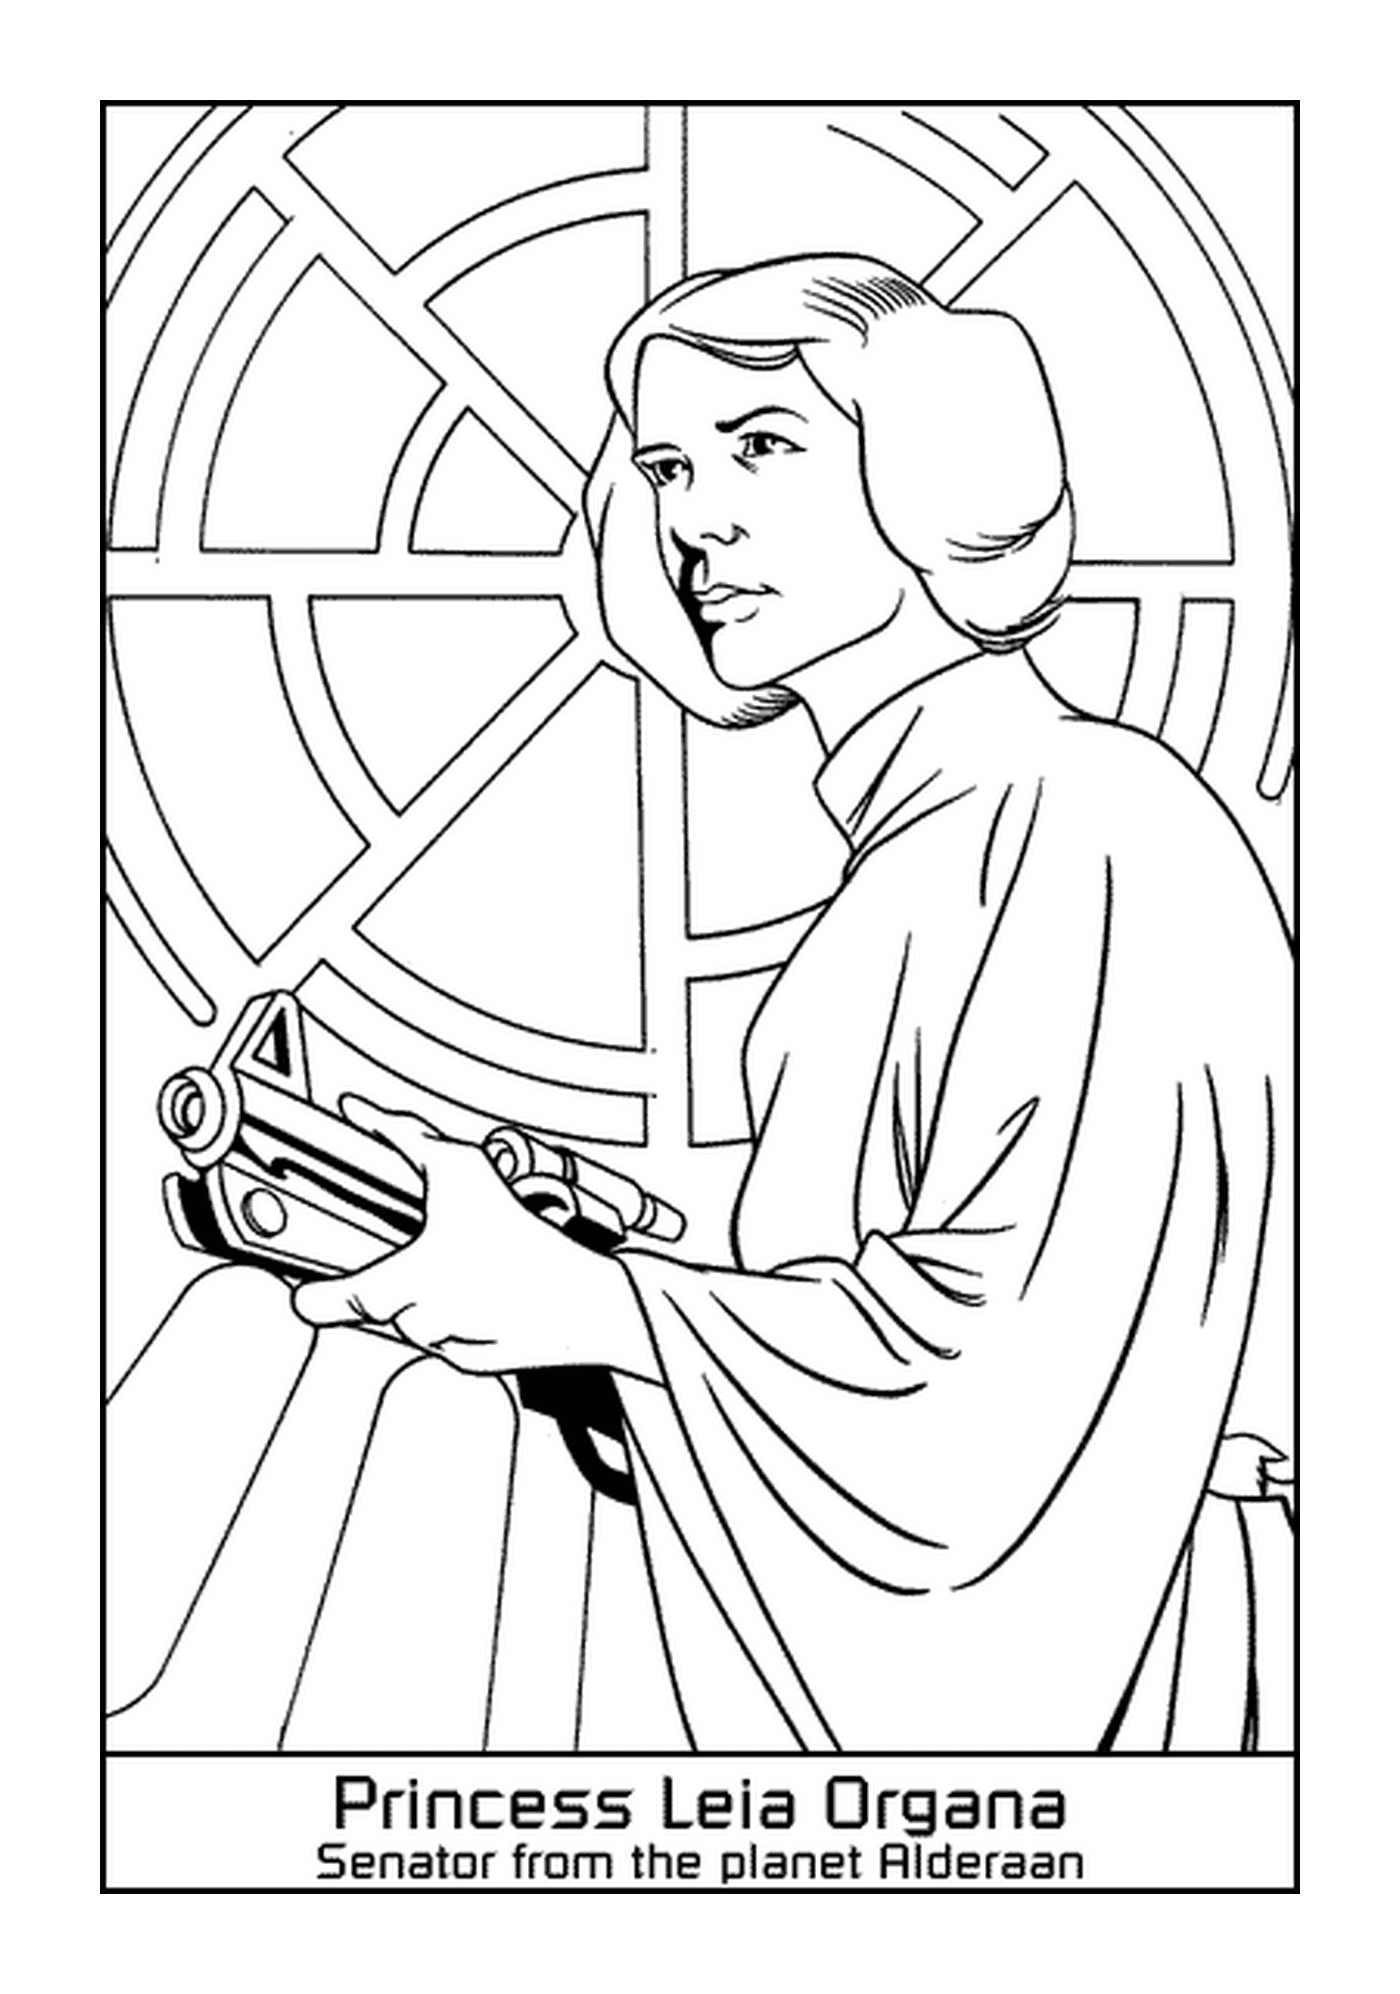  Princess Leia Organa, valiant 